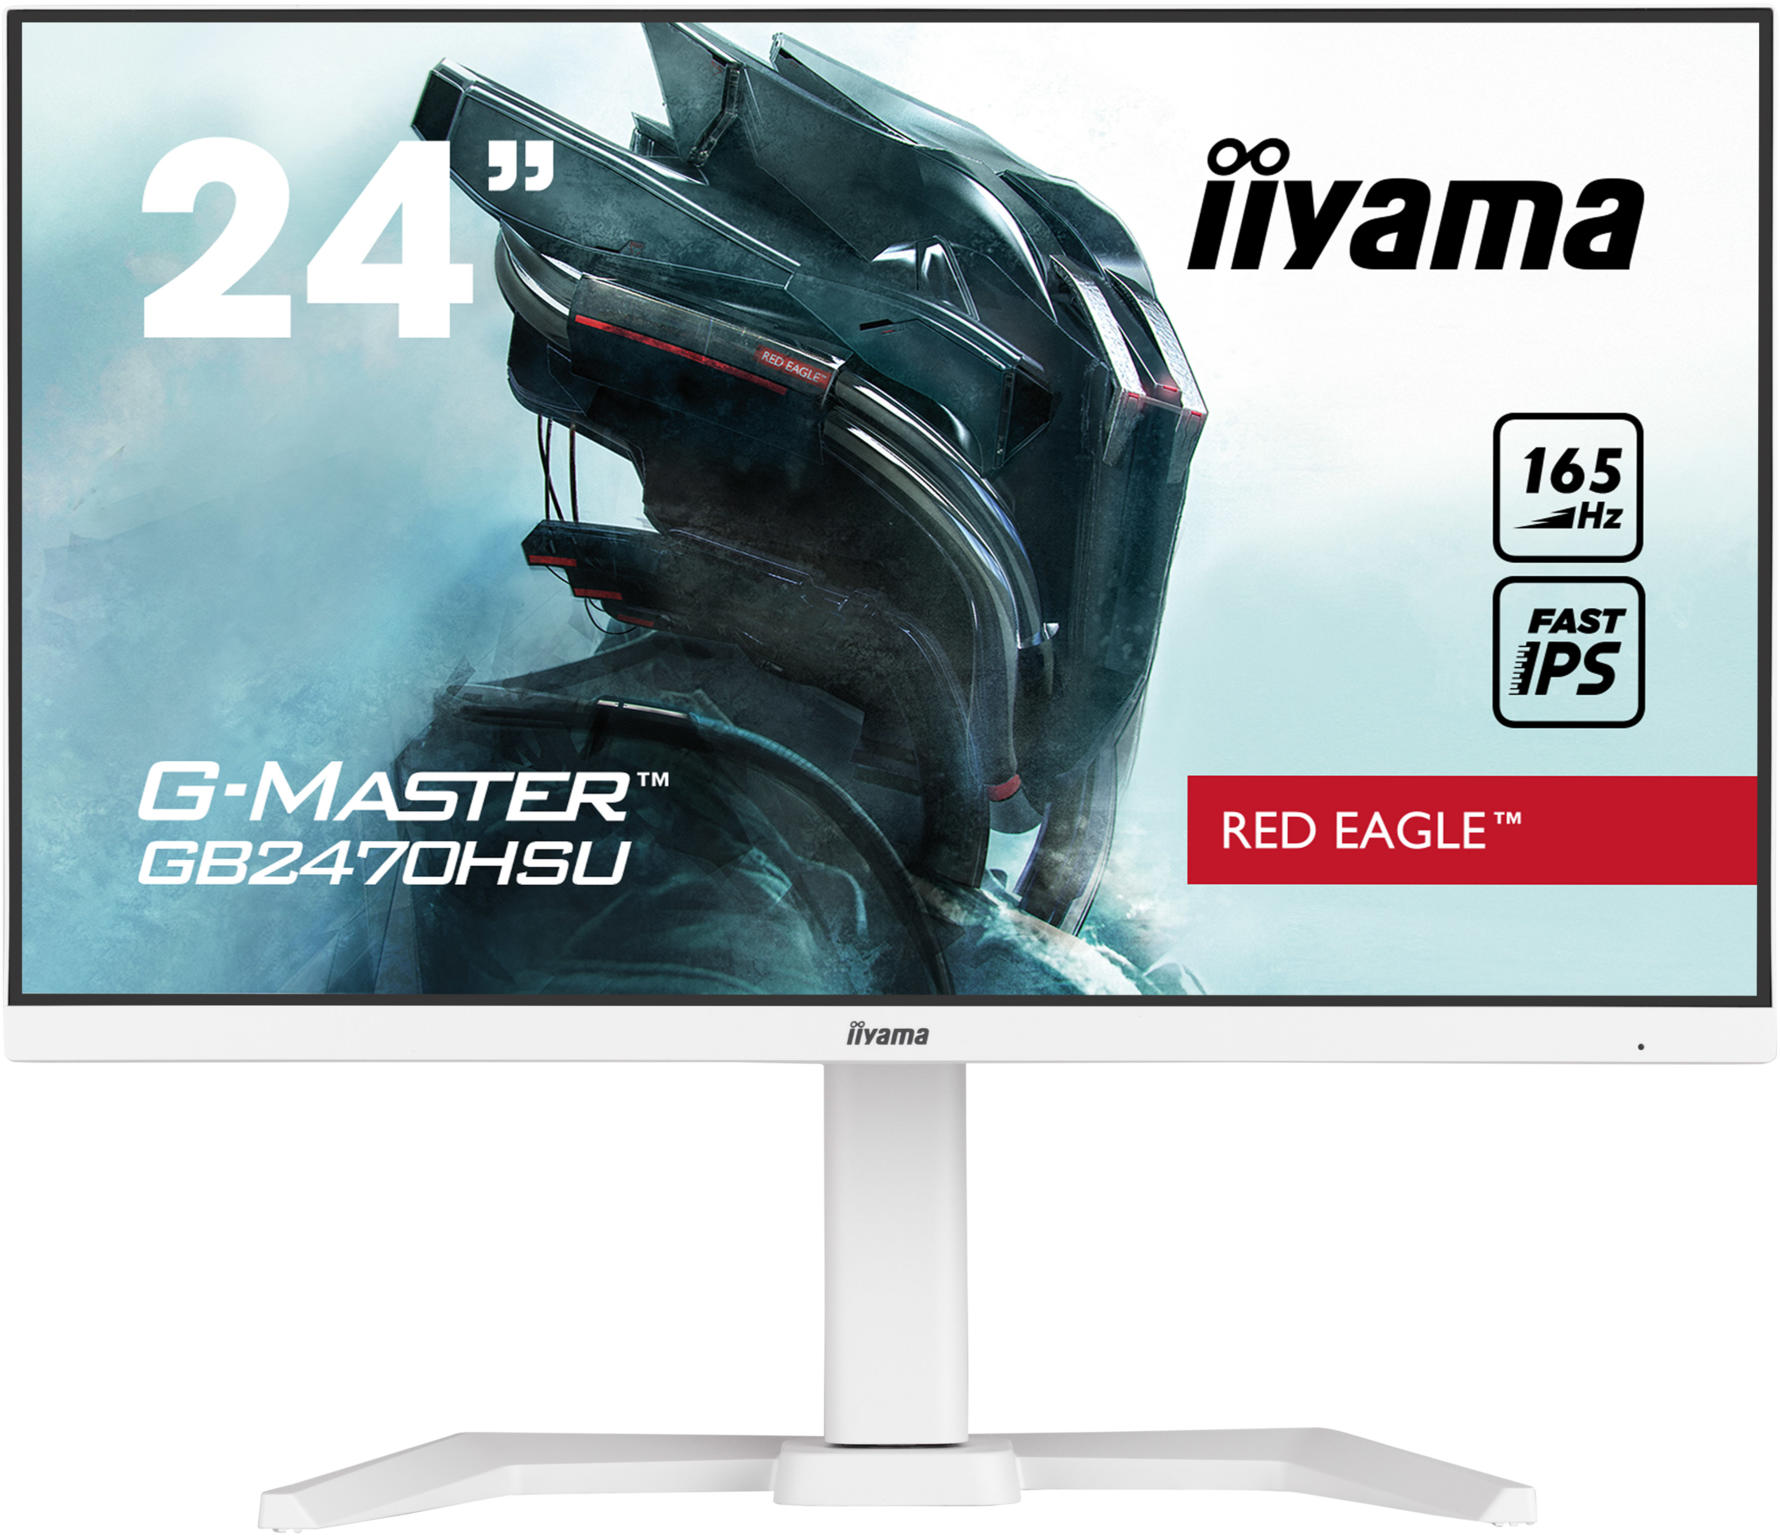 Iiyama G-Master GB2470HSU-W5 monitor